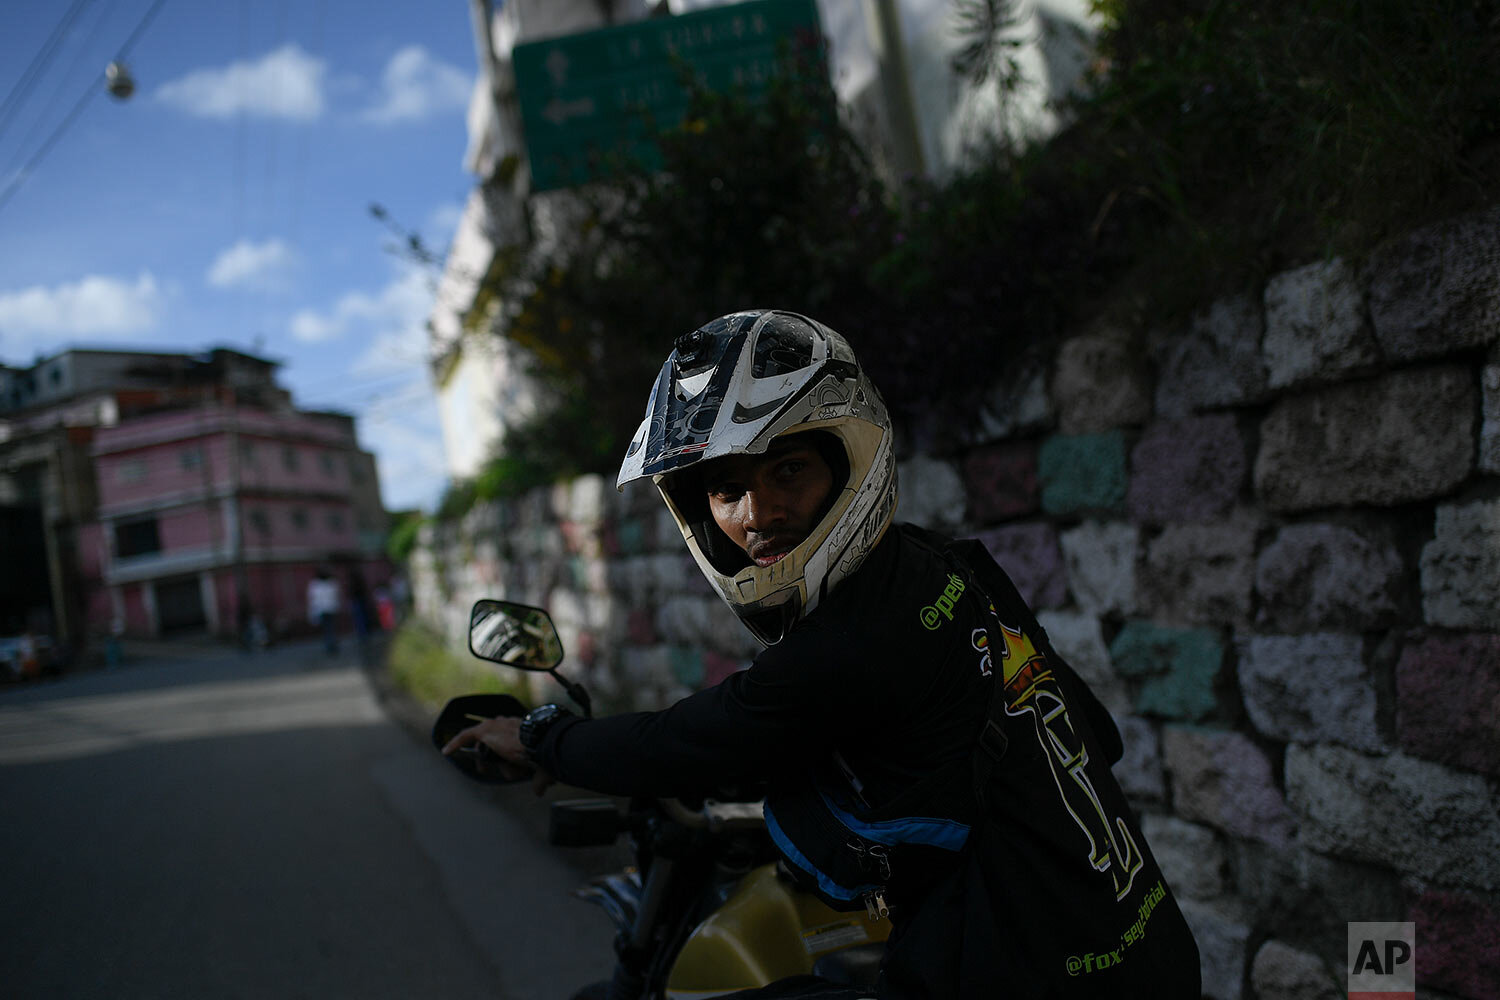  Motorcycle stuntman Pedro Aldana waits for his friends for an exhibition in the Ojo de Agua neighborhood of Caracas, Venezuela, Sunday, Jan. 10, 2021. (AP Photo/Matias Delacroix) 